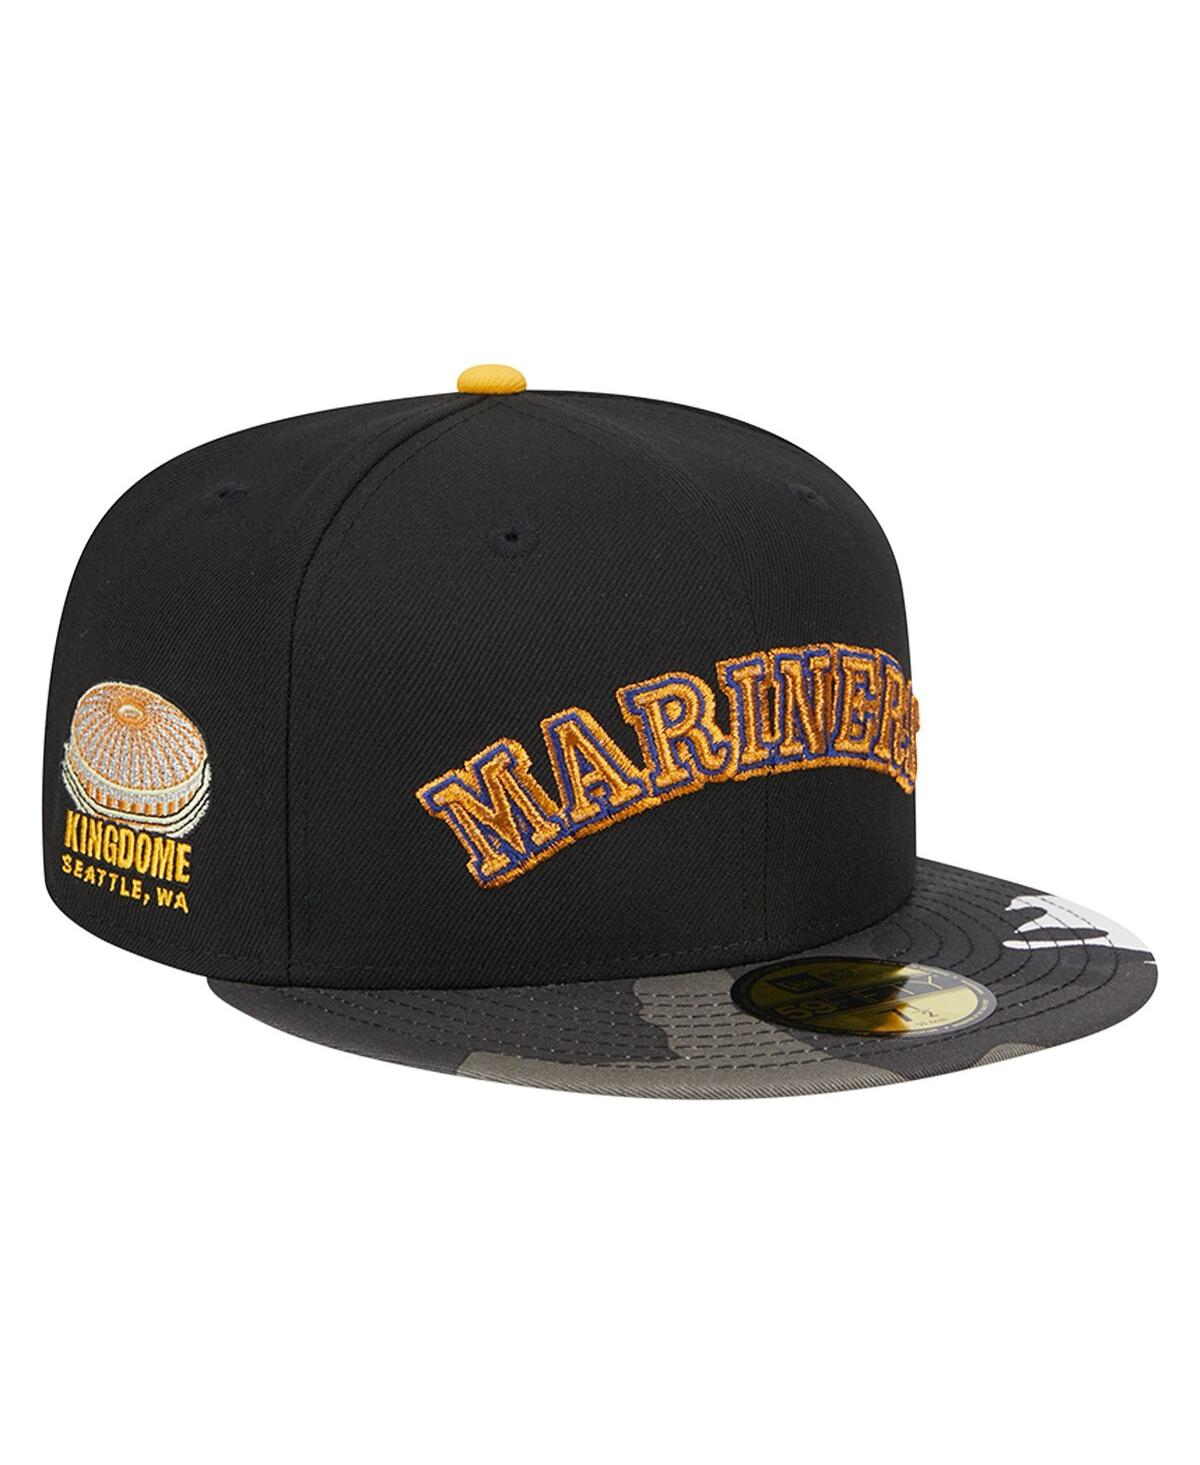 Men's New Era Black Seattle Mariners Metallic Camo 59FIFTY Fitted Hat - Black